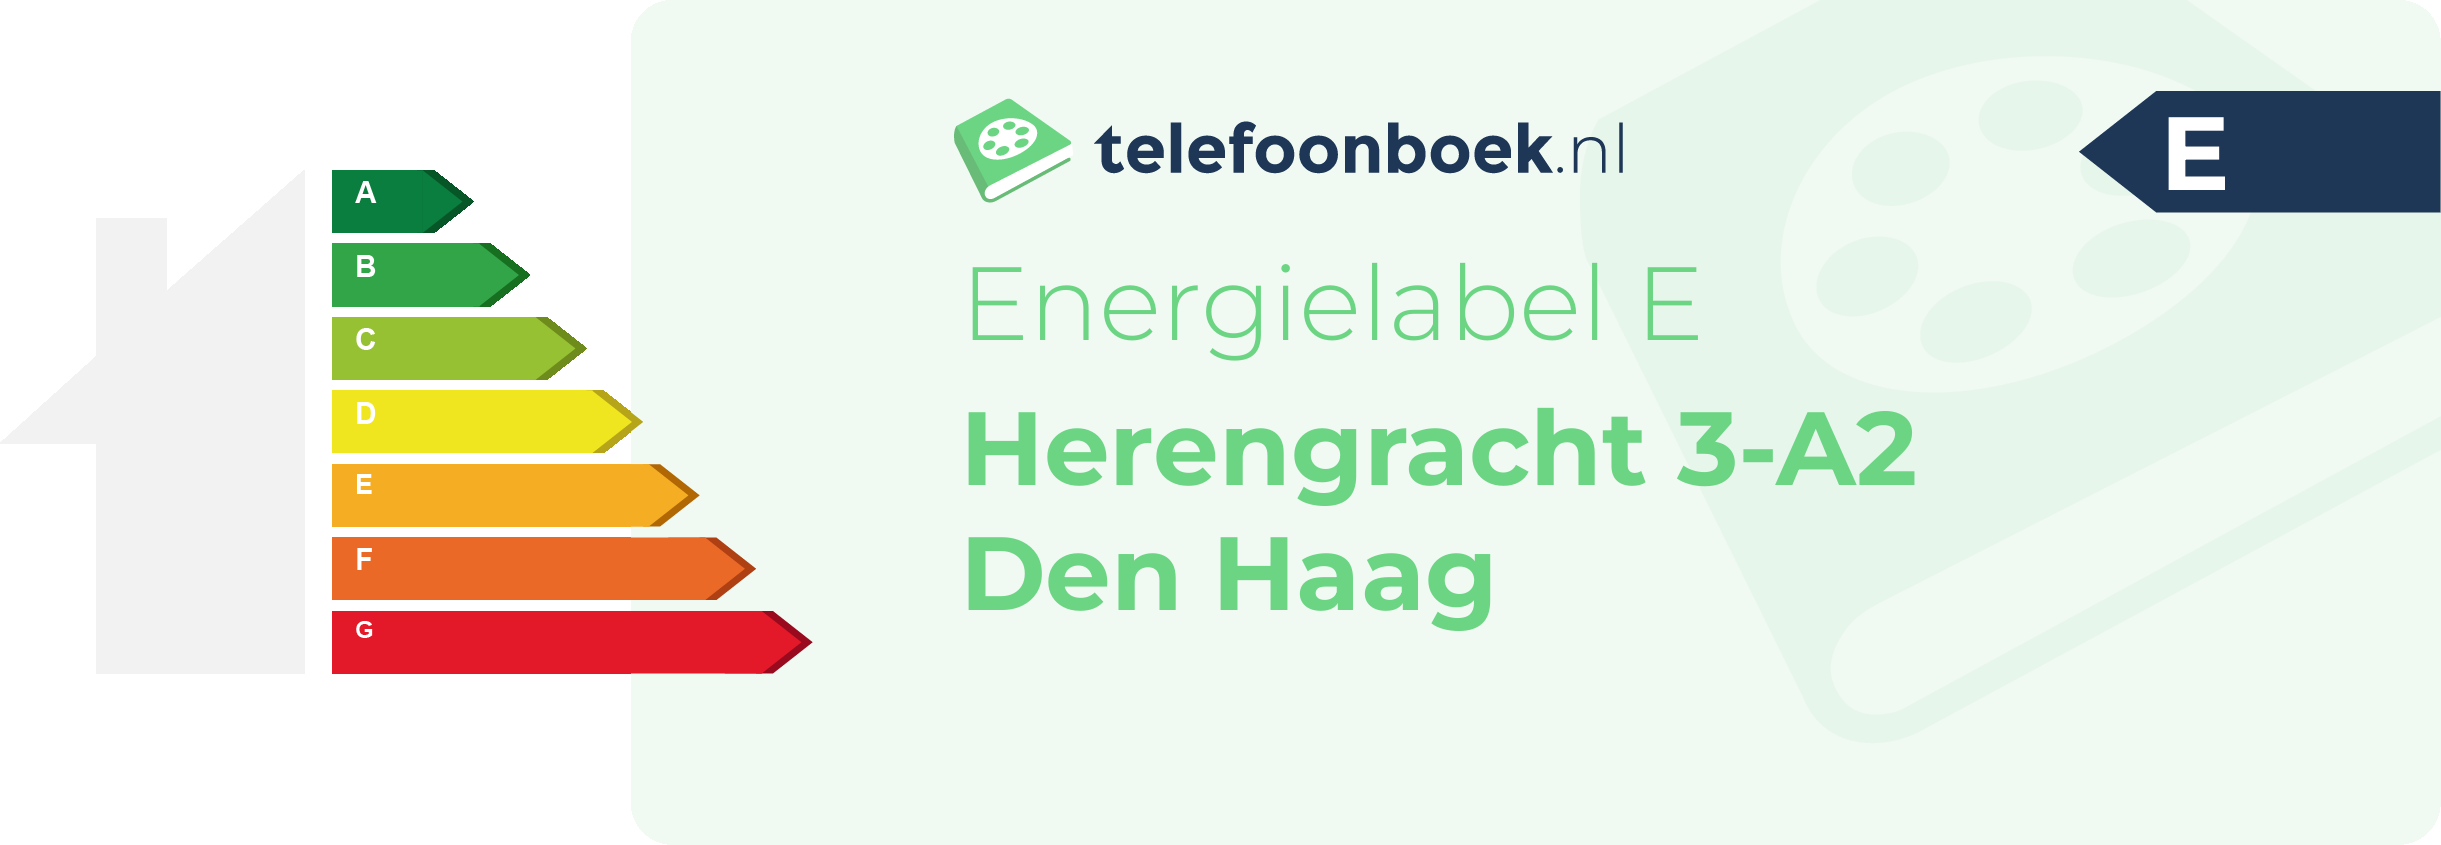 Energielabel Herengracht 3-A2 Den Haag